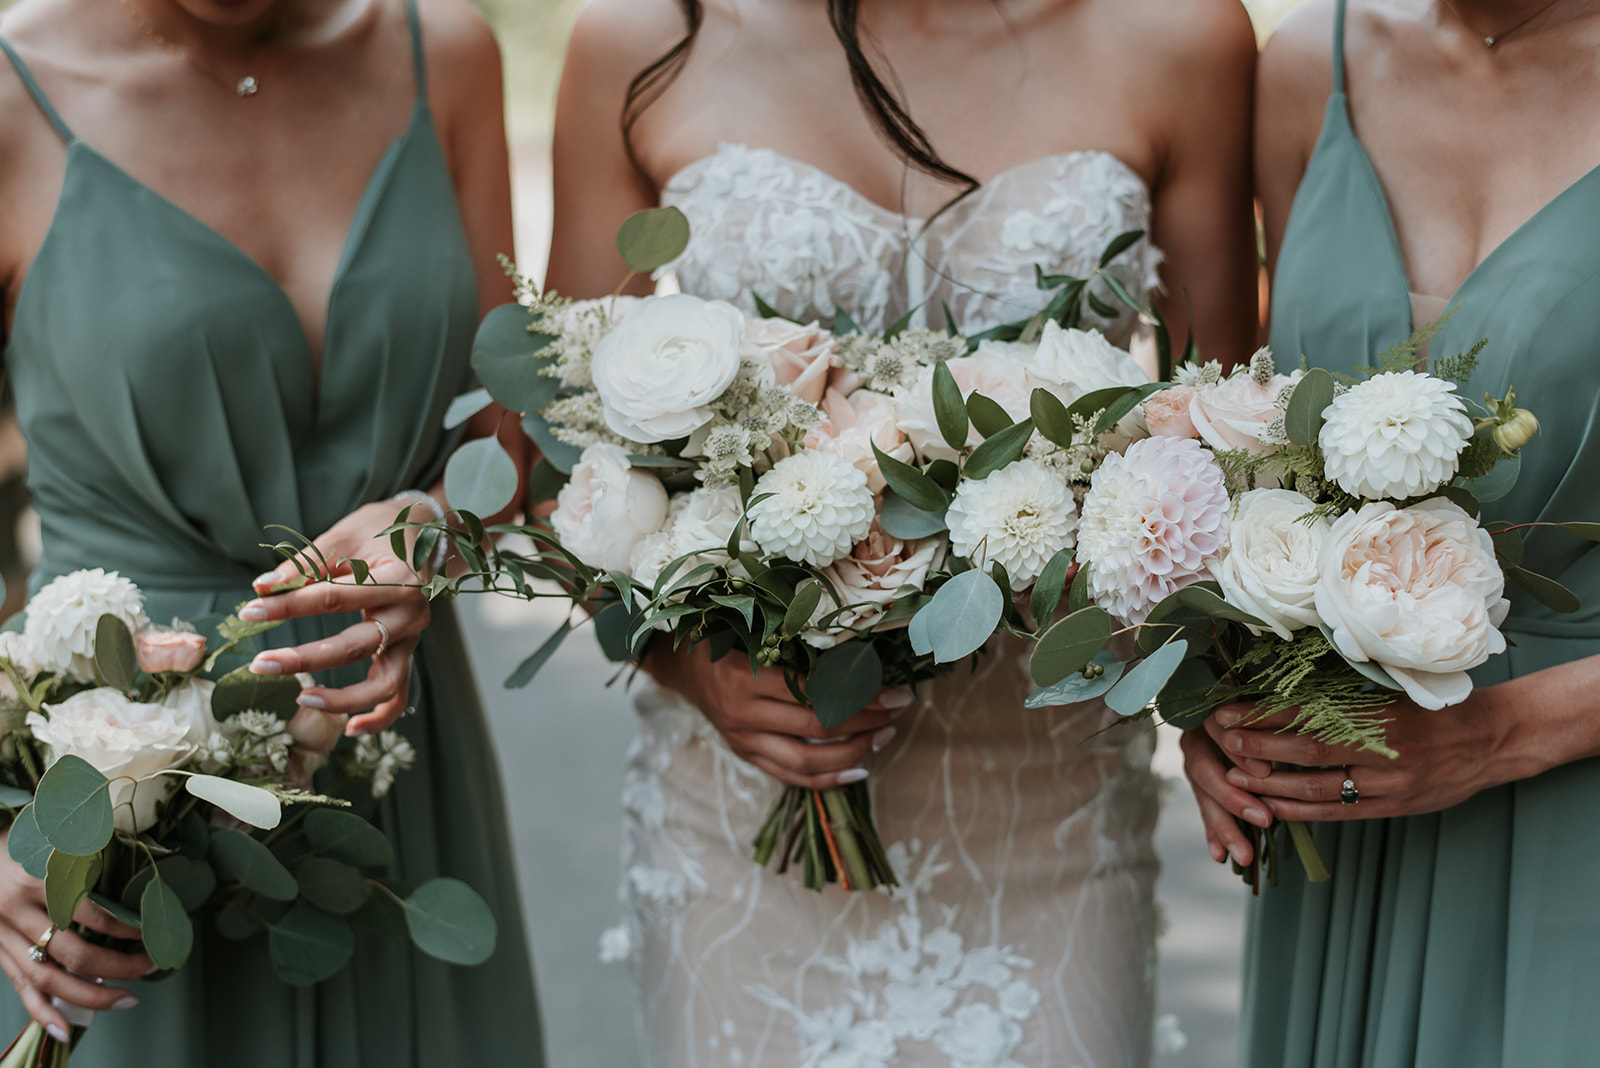 Whistler florist creates wedding bouquet